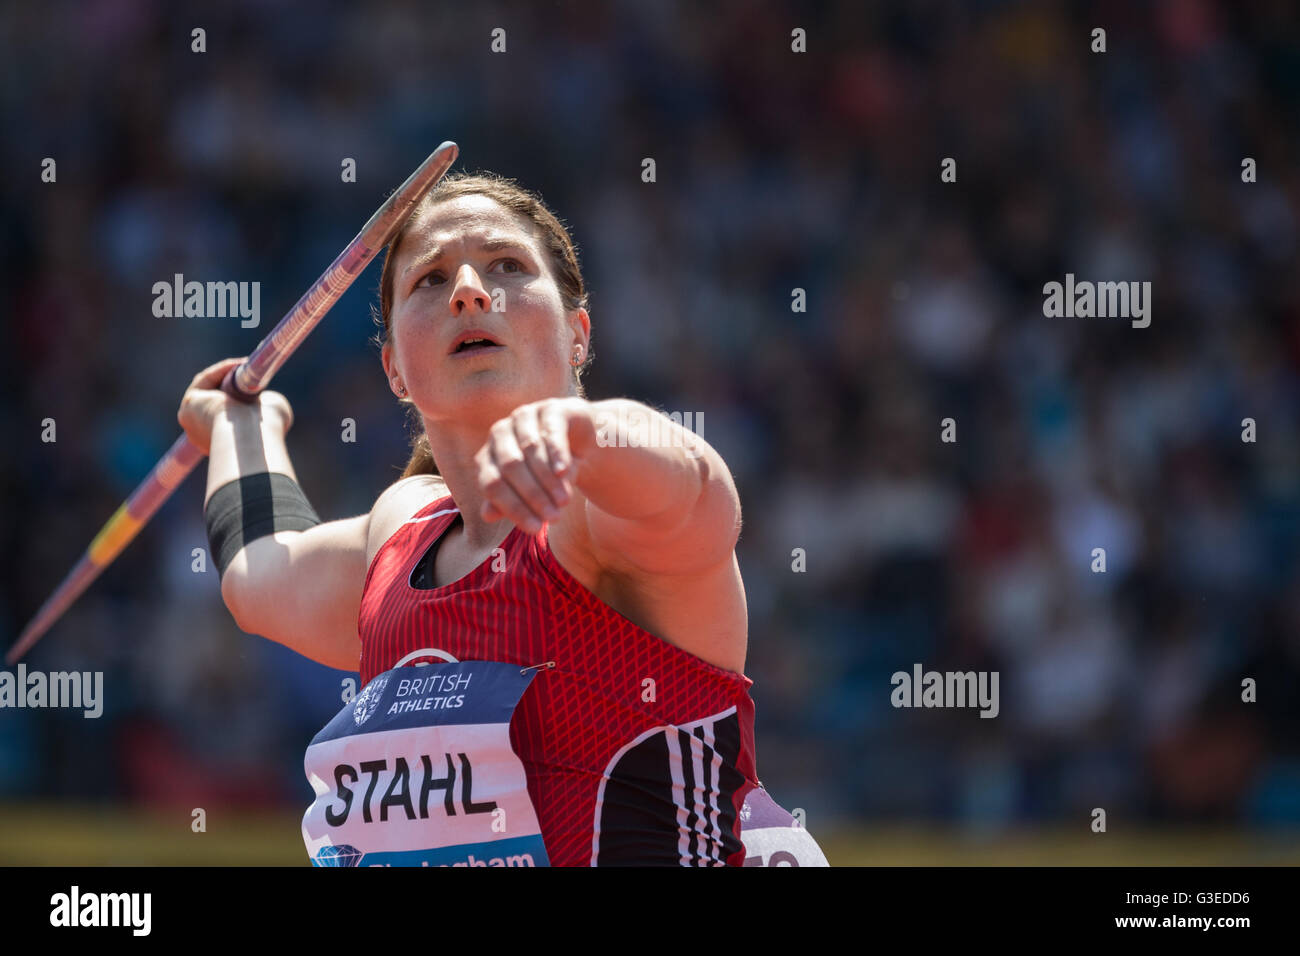 Diamond League Birmingham UK. 5th June 2016. German athlete Linda Stahl competes in the javelin throw. Stock Photo